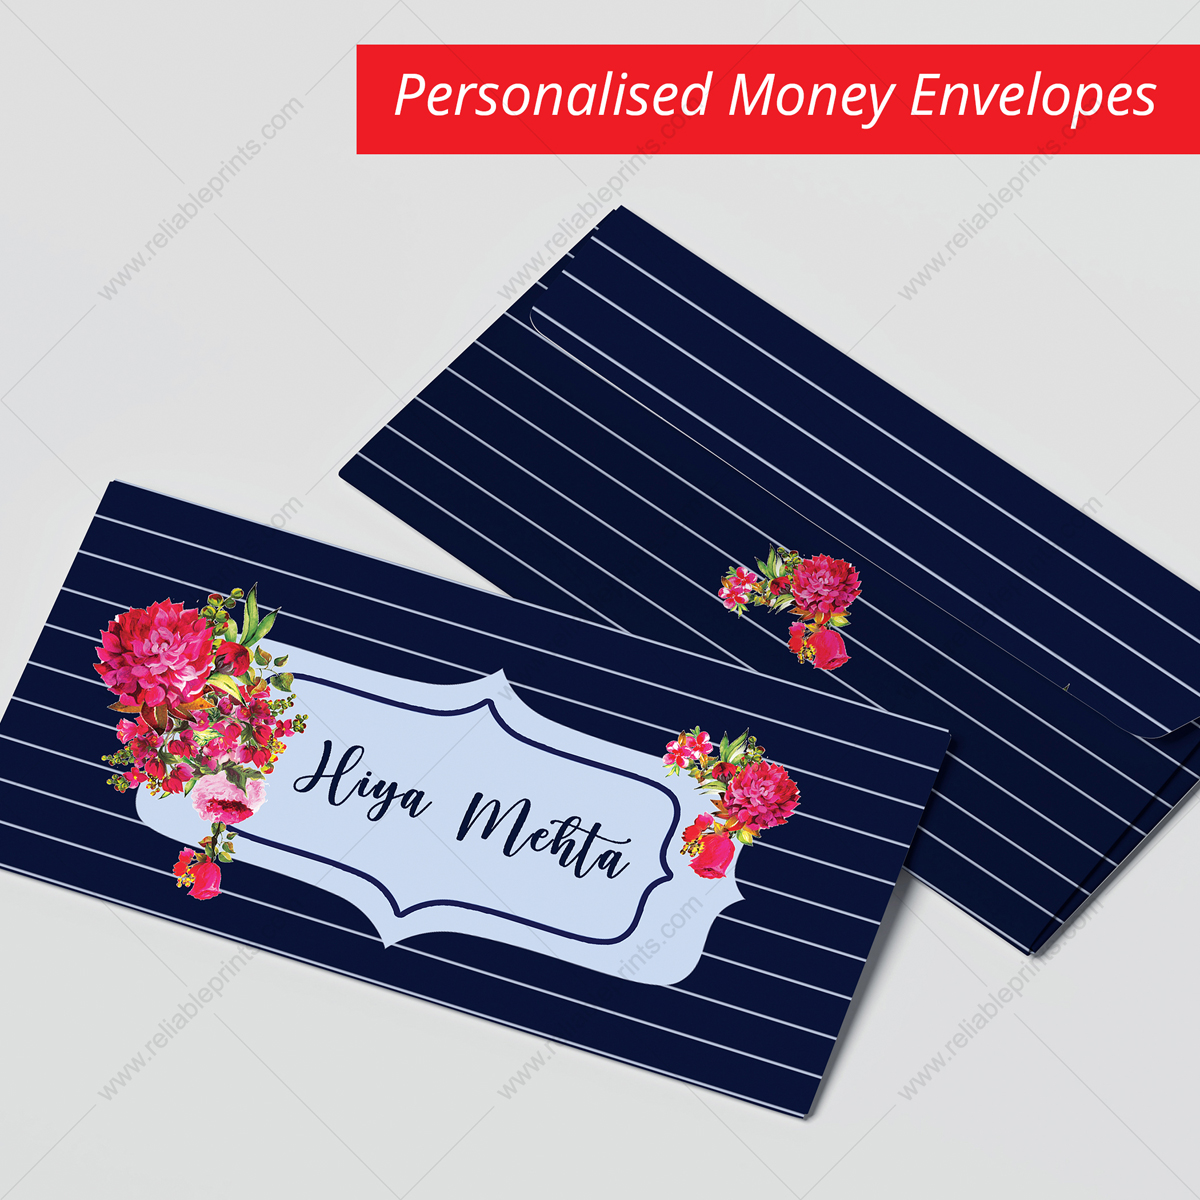 Personalised Money Envelopes